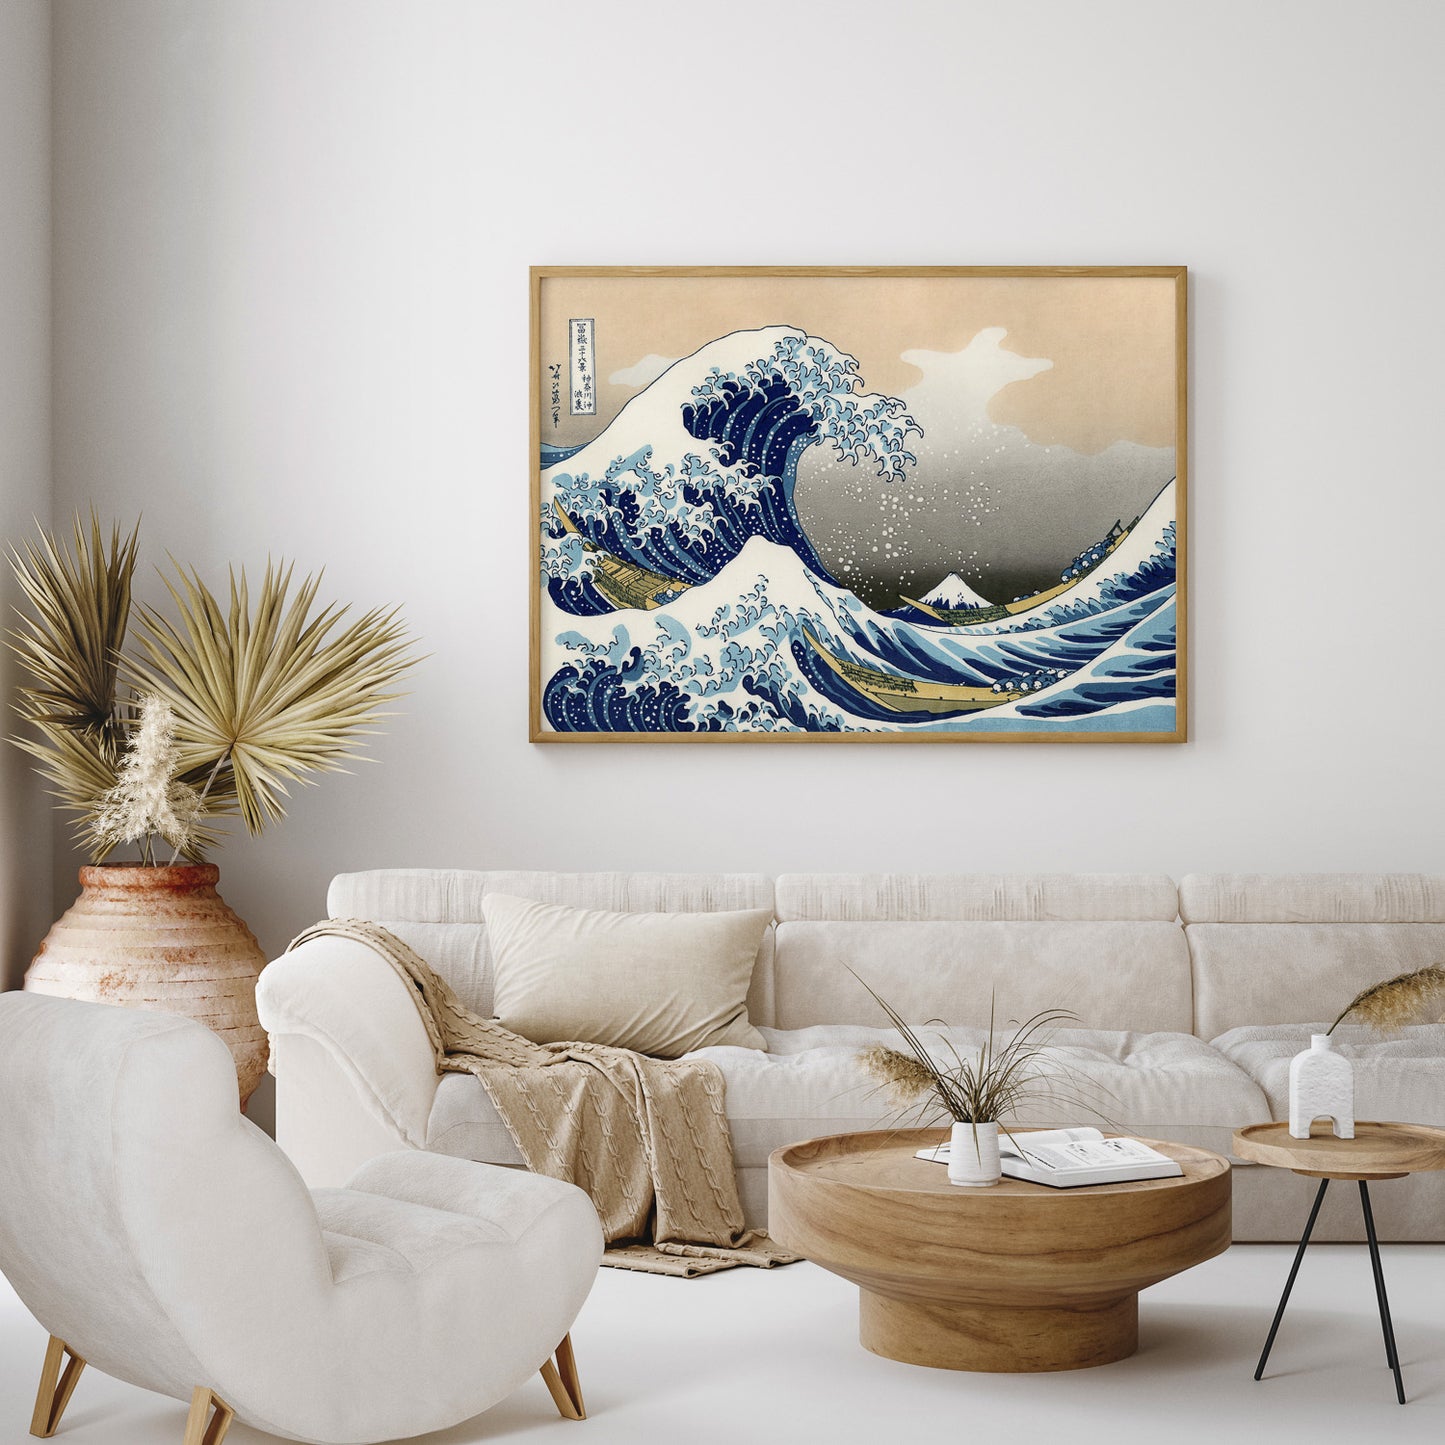 Tavla med The Great Wave off Kanagawa poster – Katsushika Hokusai – Japansk konst